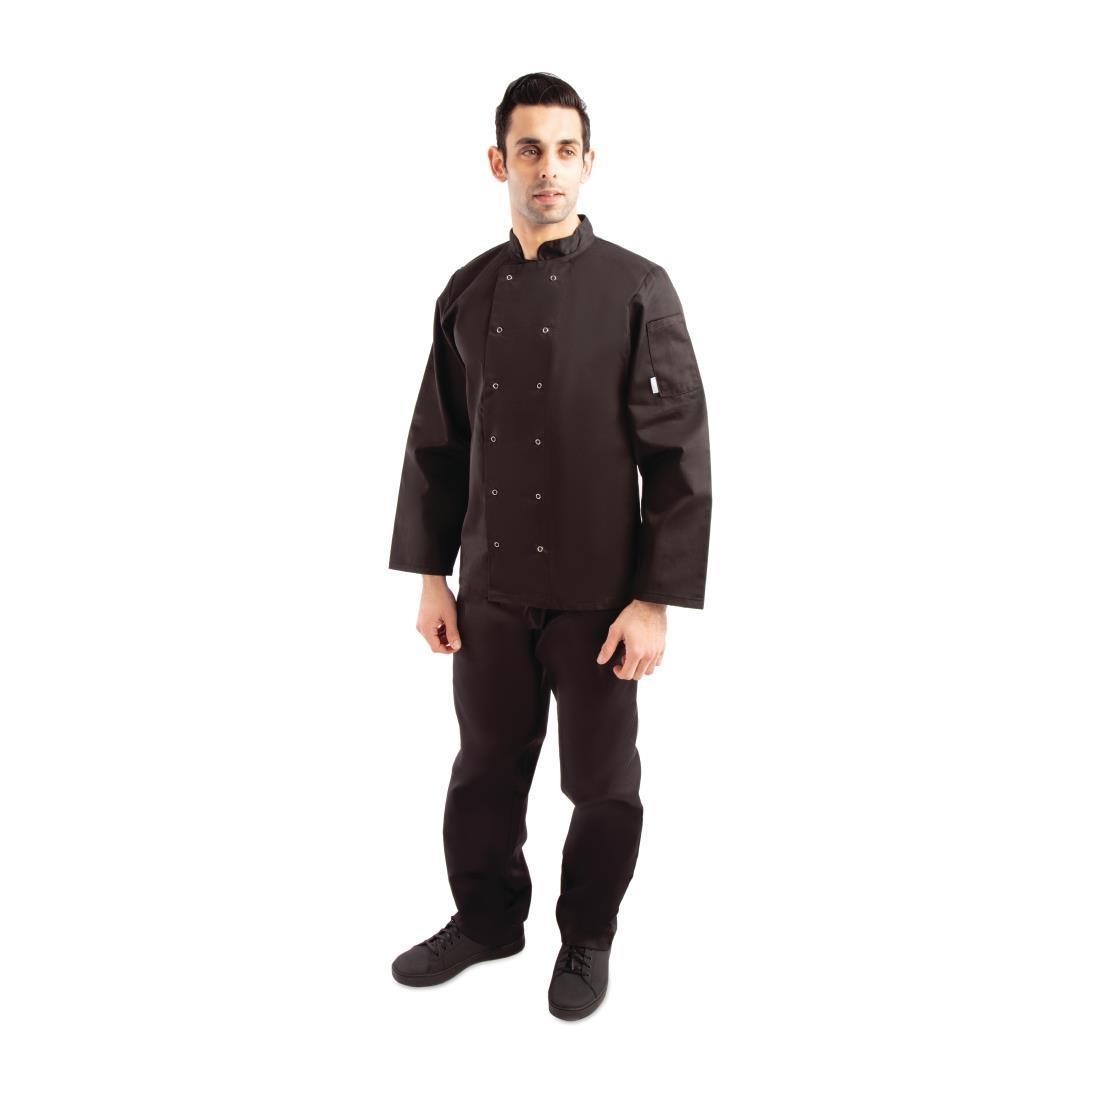 Whites Vegas Unisex Chefs Jacket Long Sleeve Black L - A438-L  - 7